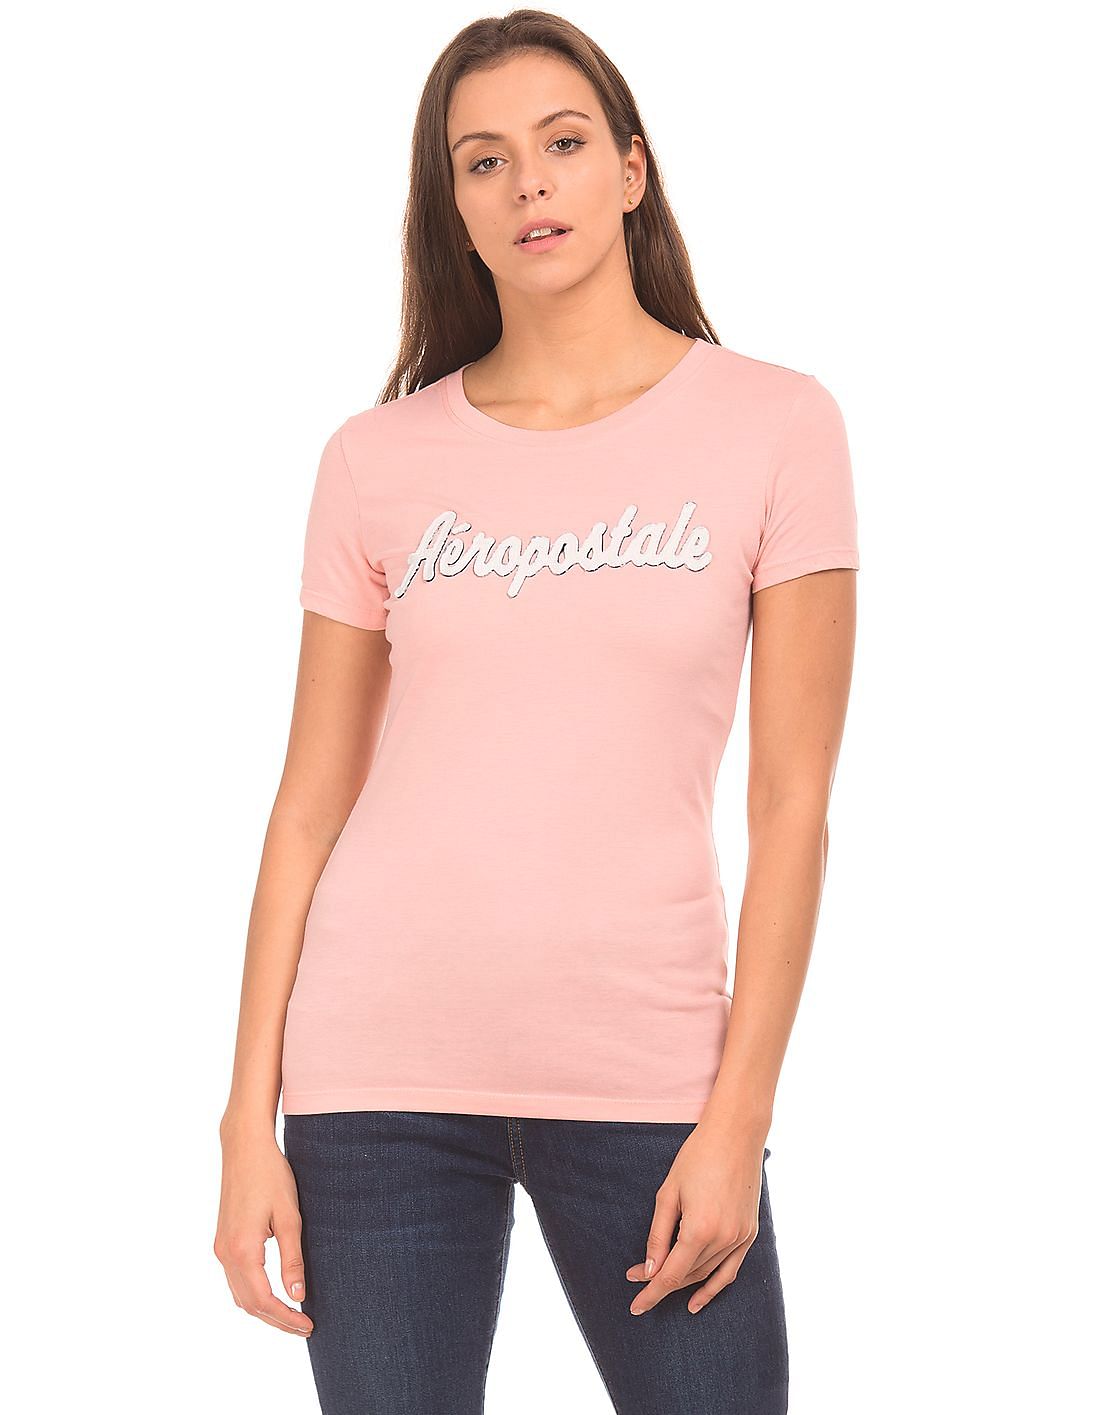 Buy Aeropostale Crew Neck Appliqued T-Shirt - NNNOW.com